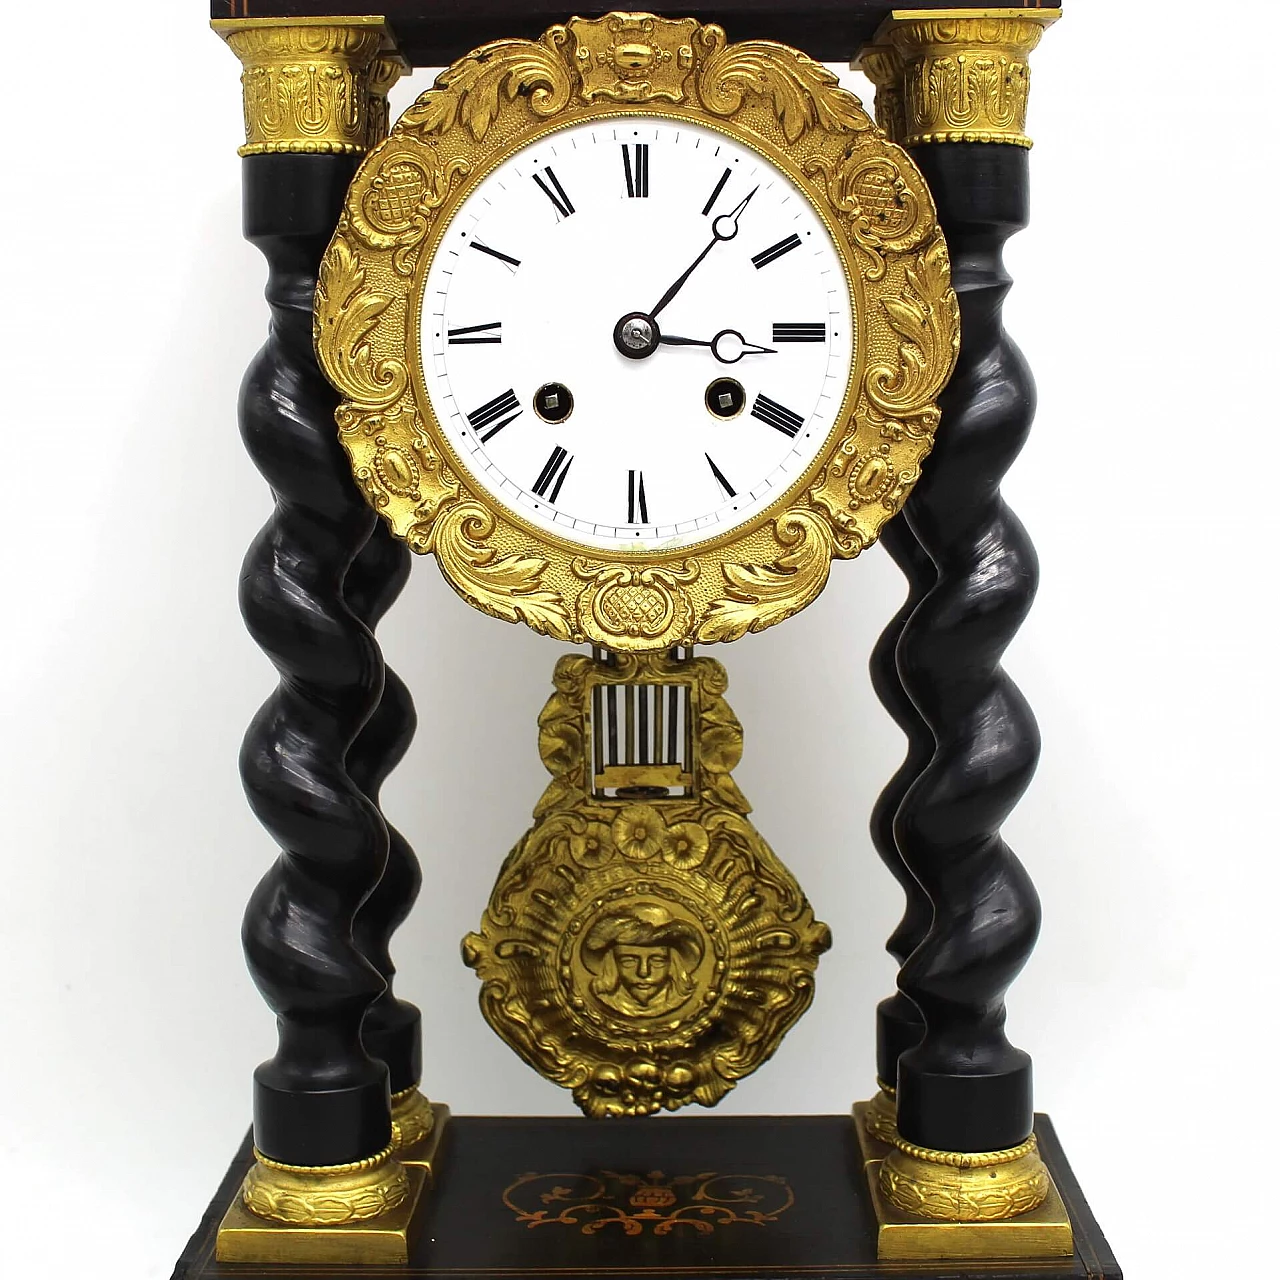 Napoleon III pendulum clock in inlaid ebonized wood and bronze, 19th century 1254240